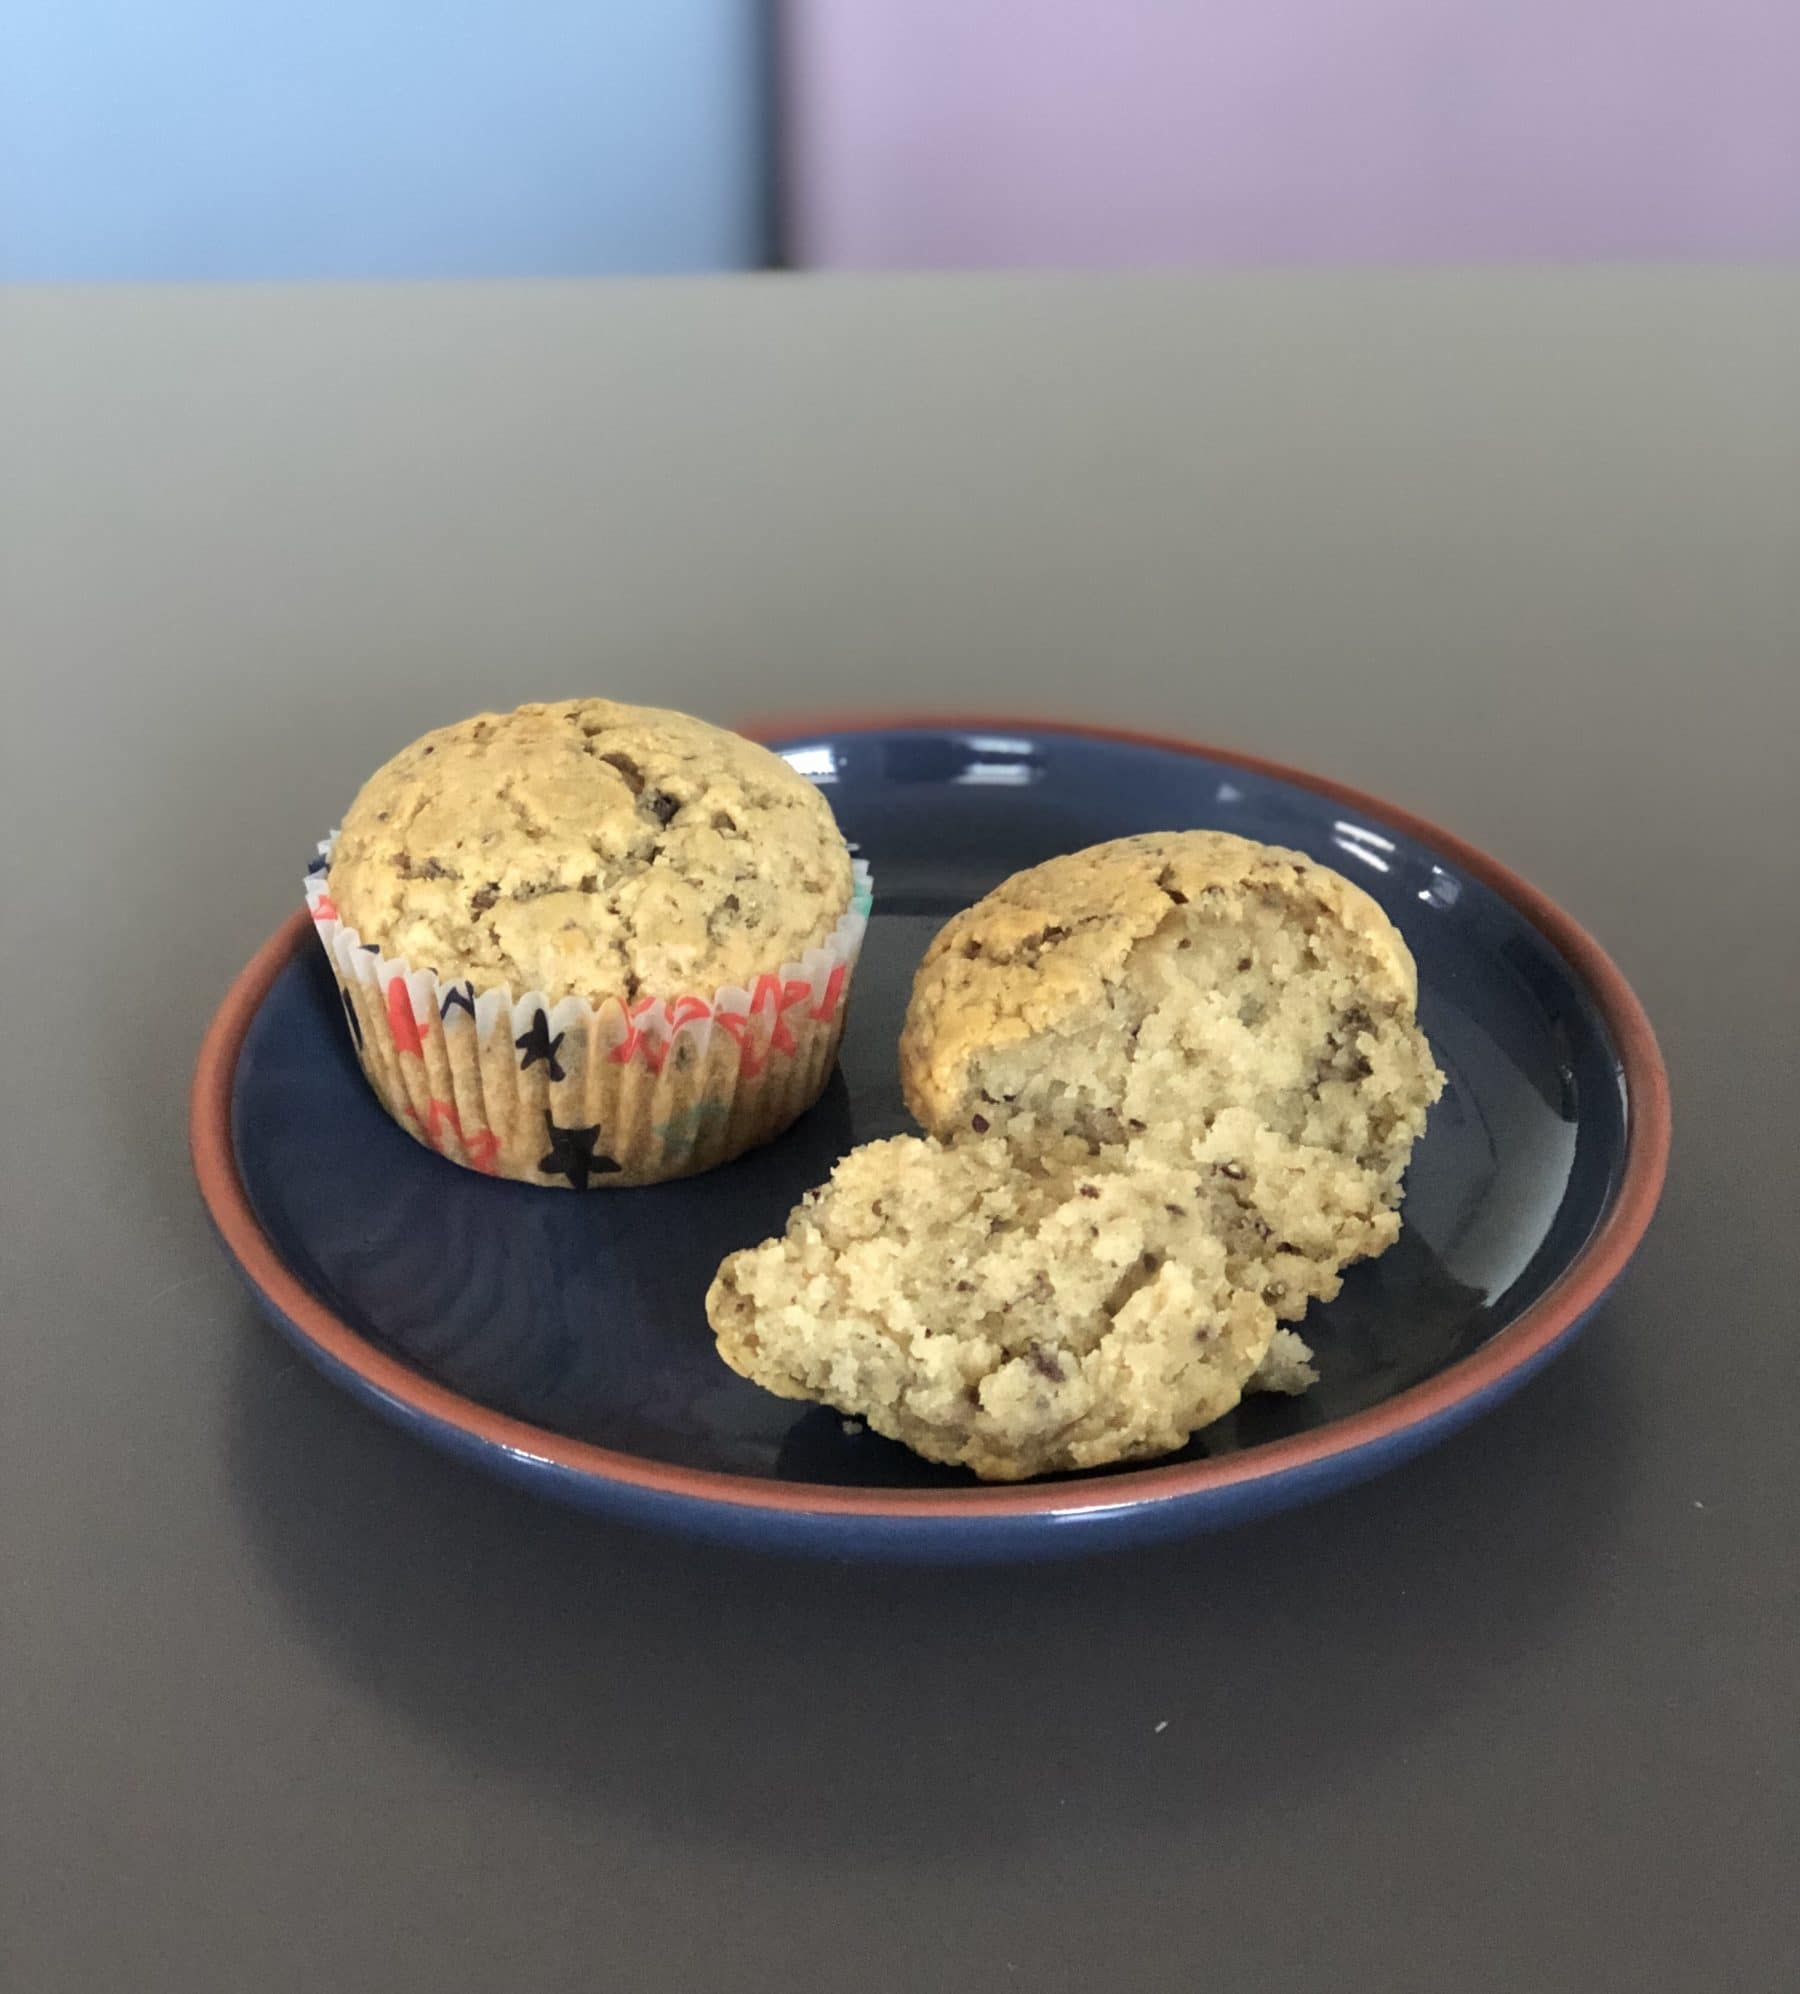 Basis recept voor vegan muffins / cupcakes